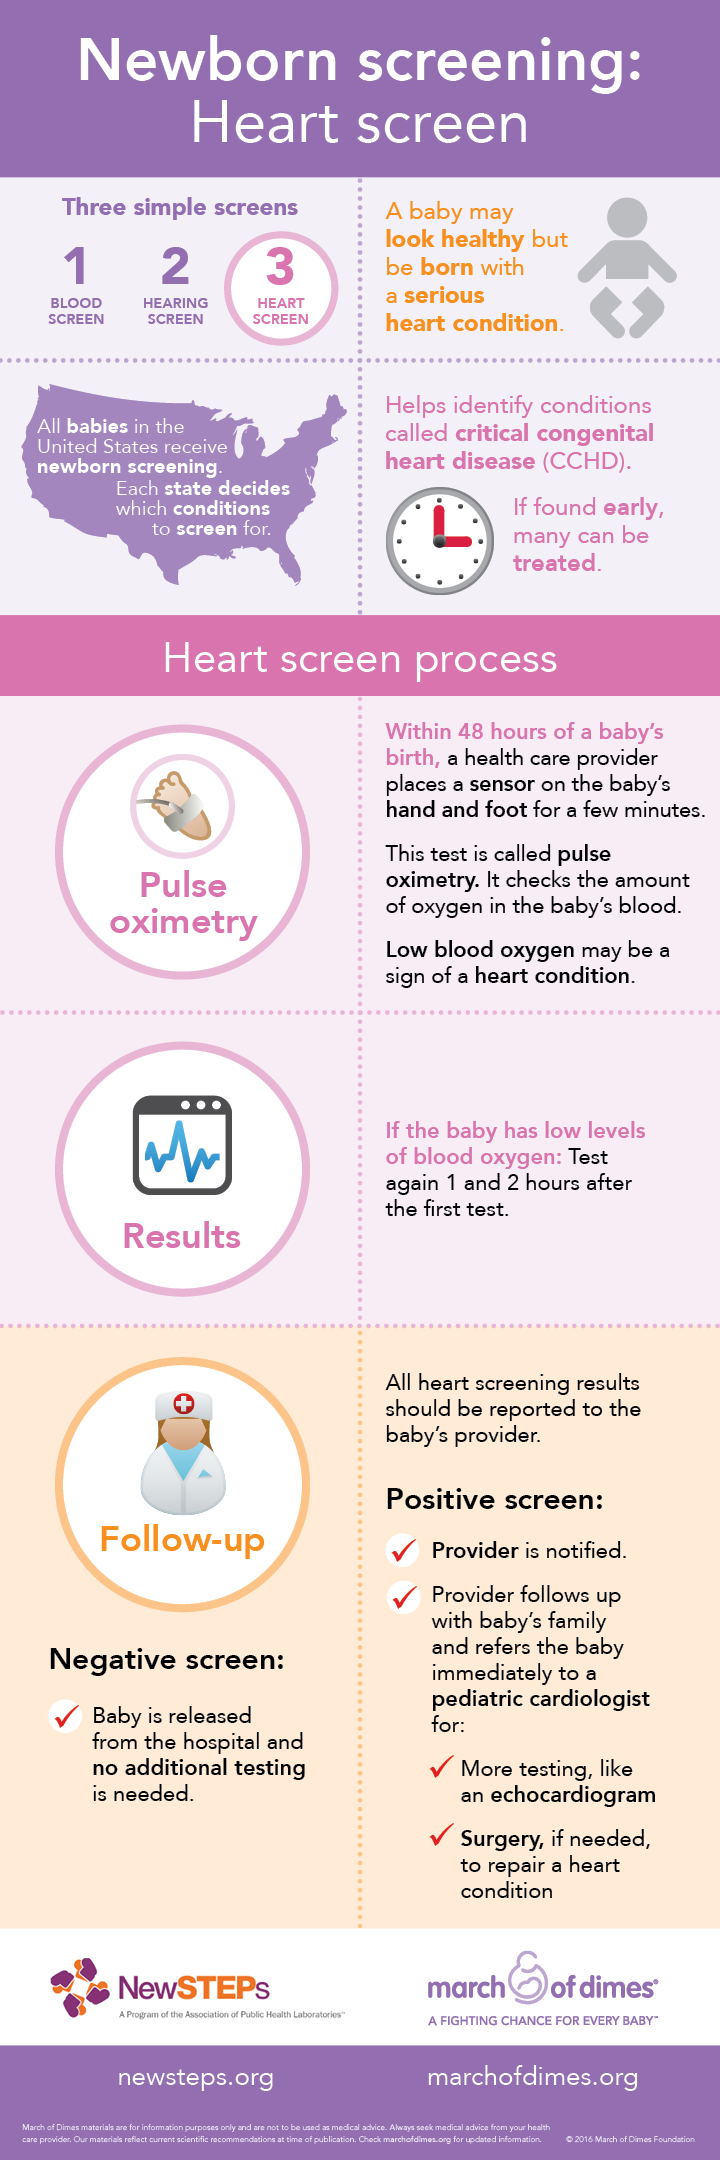 Heart Screening Infographic